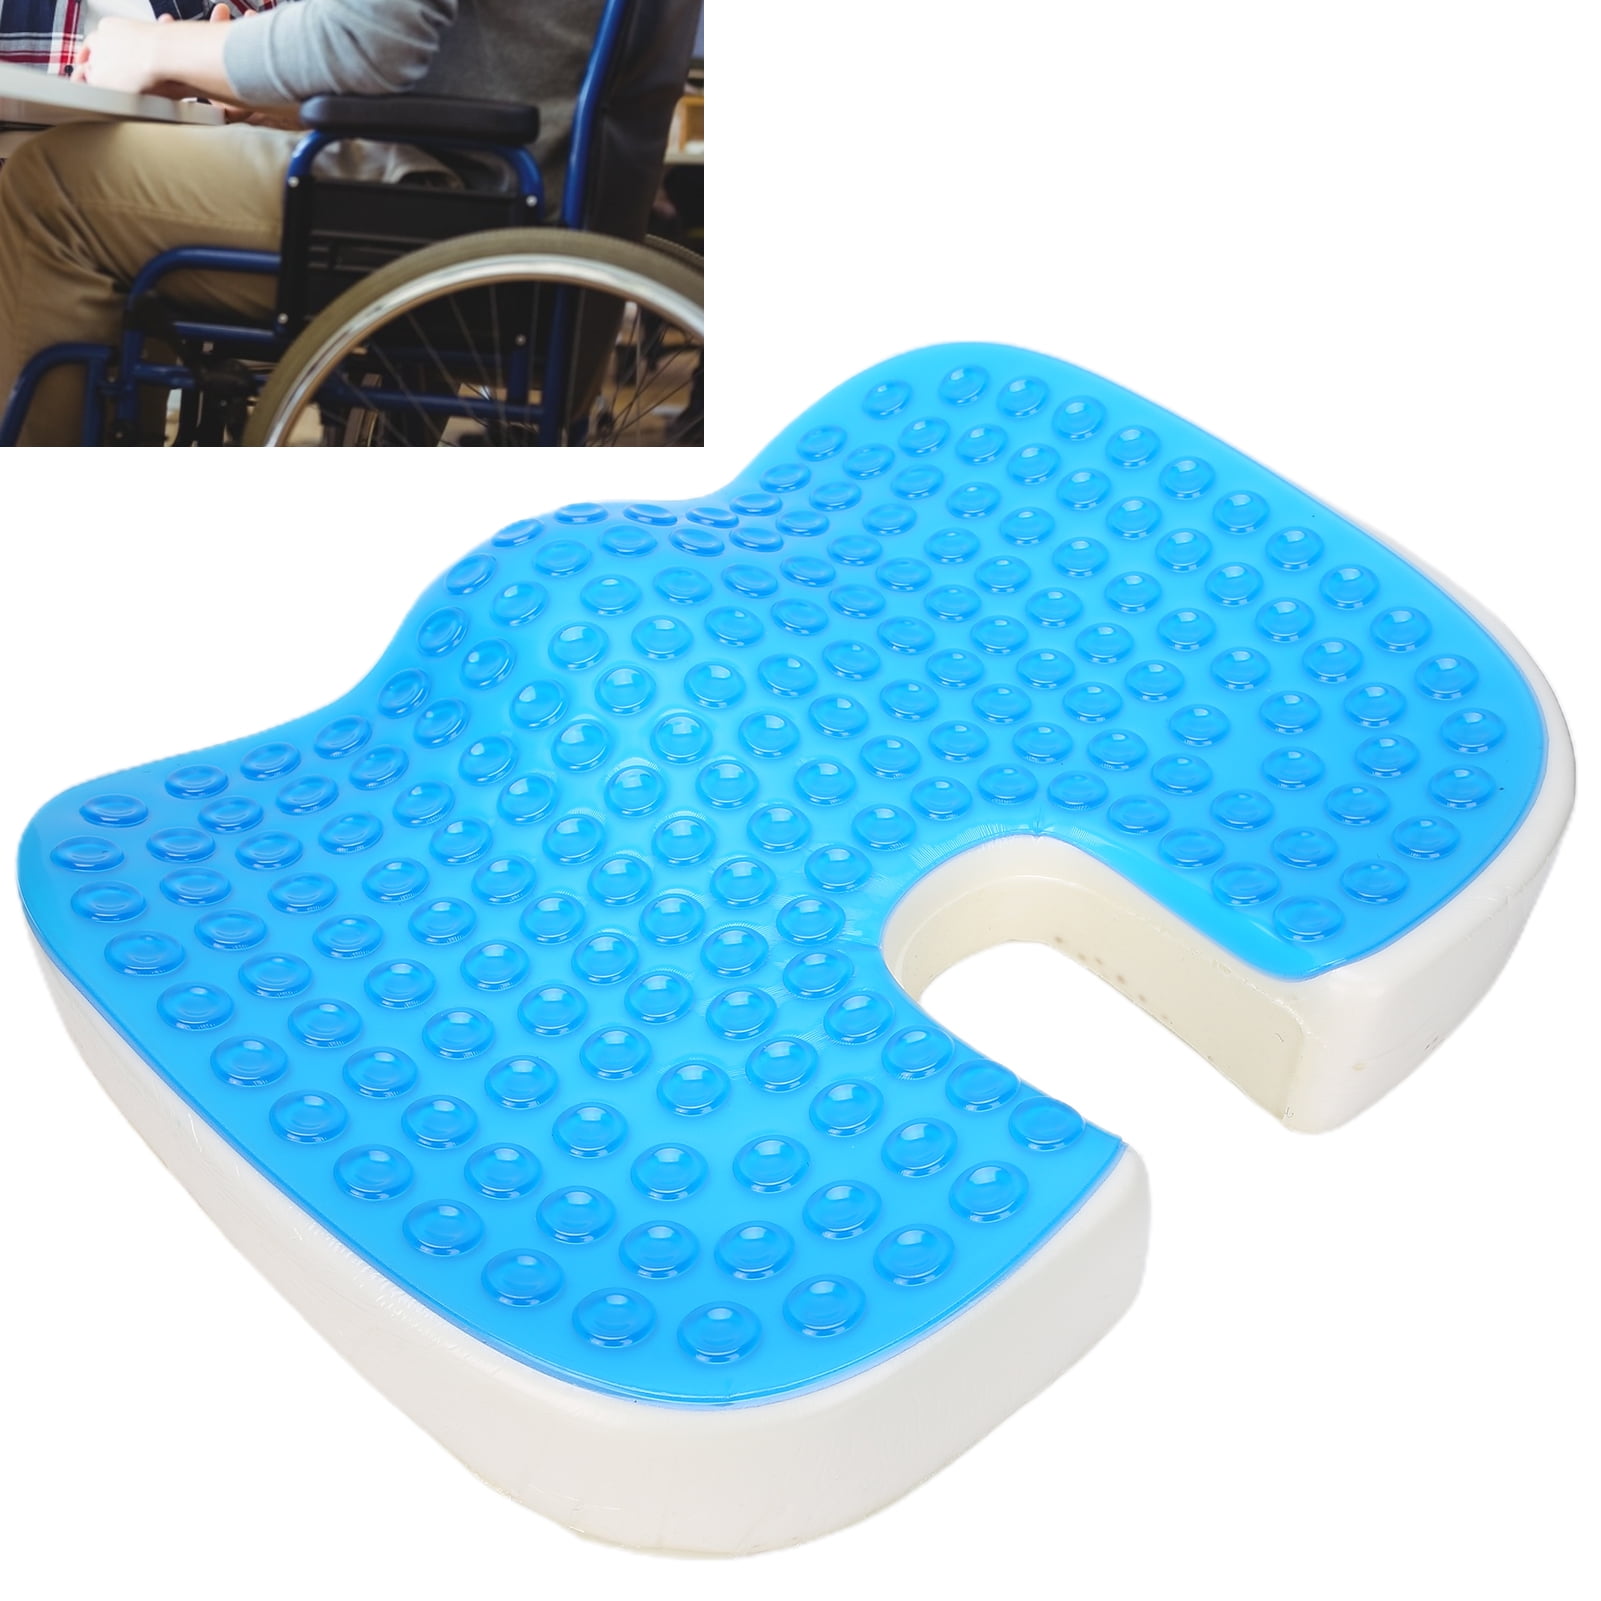 Gel E Foam / Gel Seat Cushion 18 x 16 x 3 For Wheelchair Seats 14886 